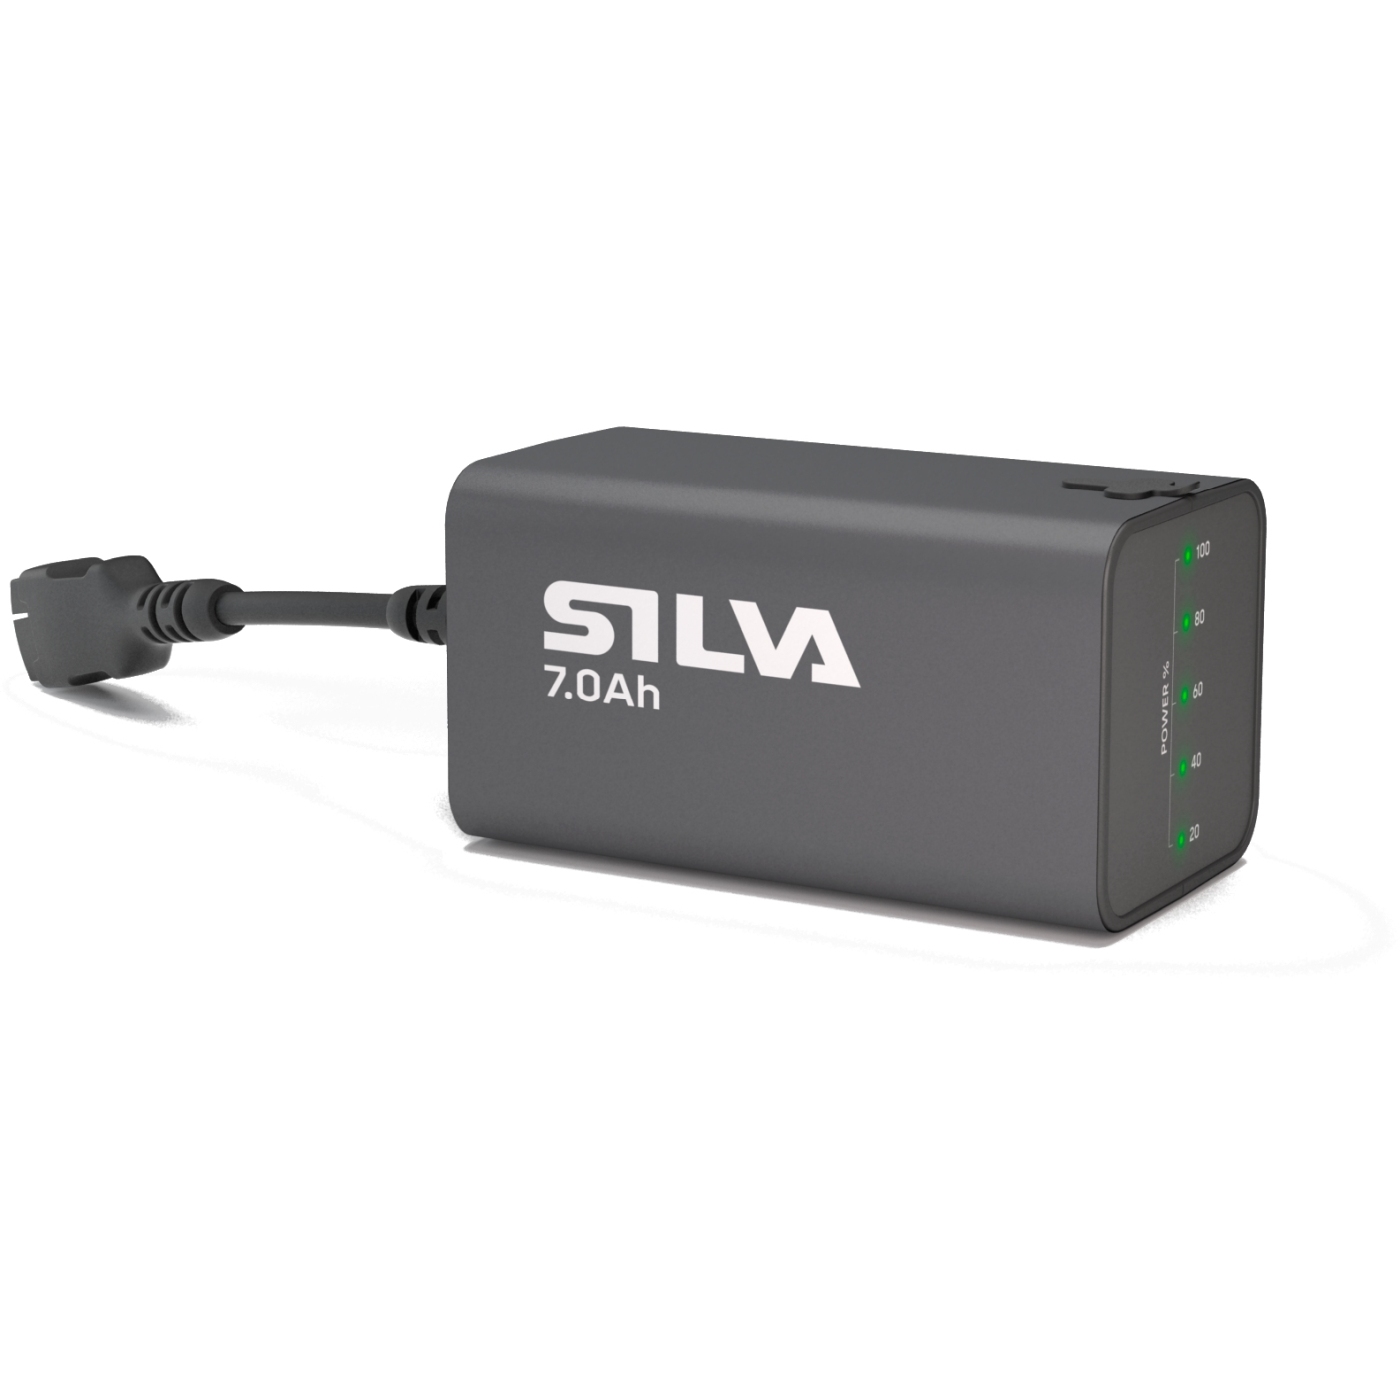 Bild von Silva Battery 7.0Ah Batterie